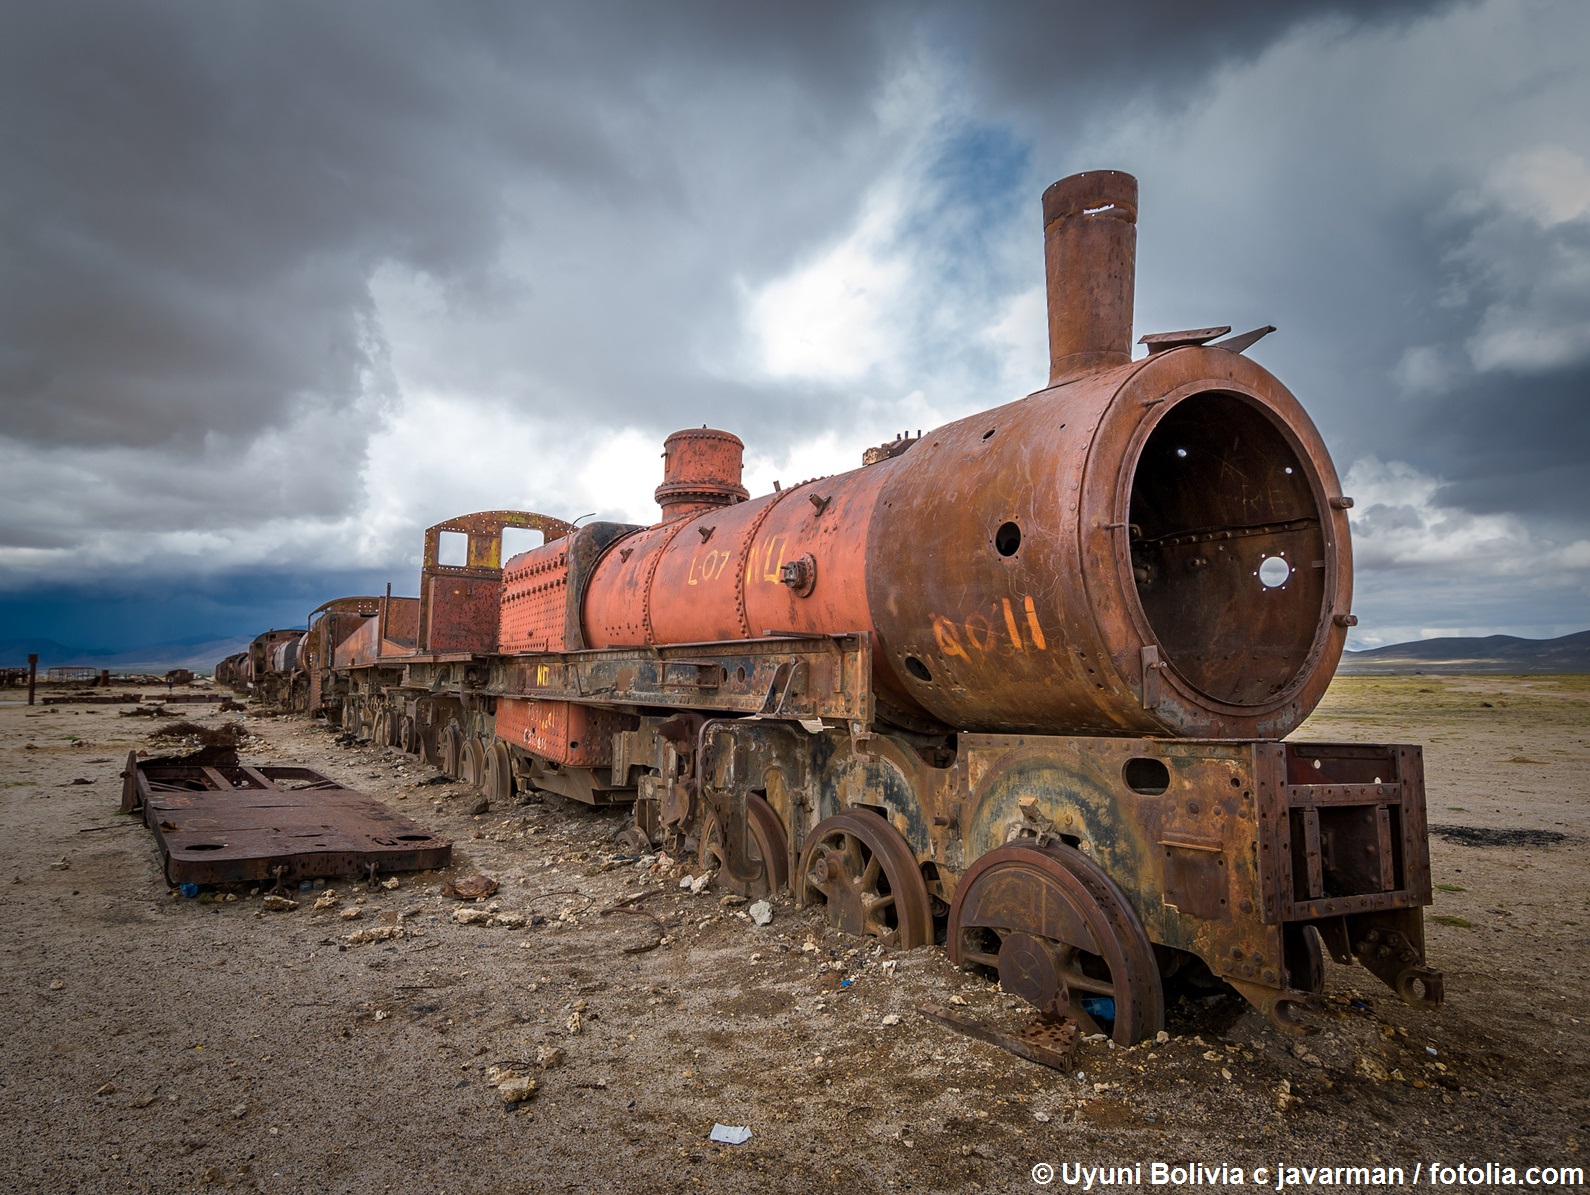 Verrostete Dampflokomotive © c javarman / fotolia.com